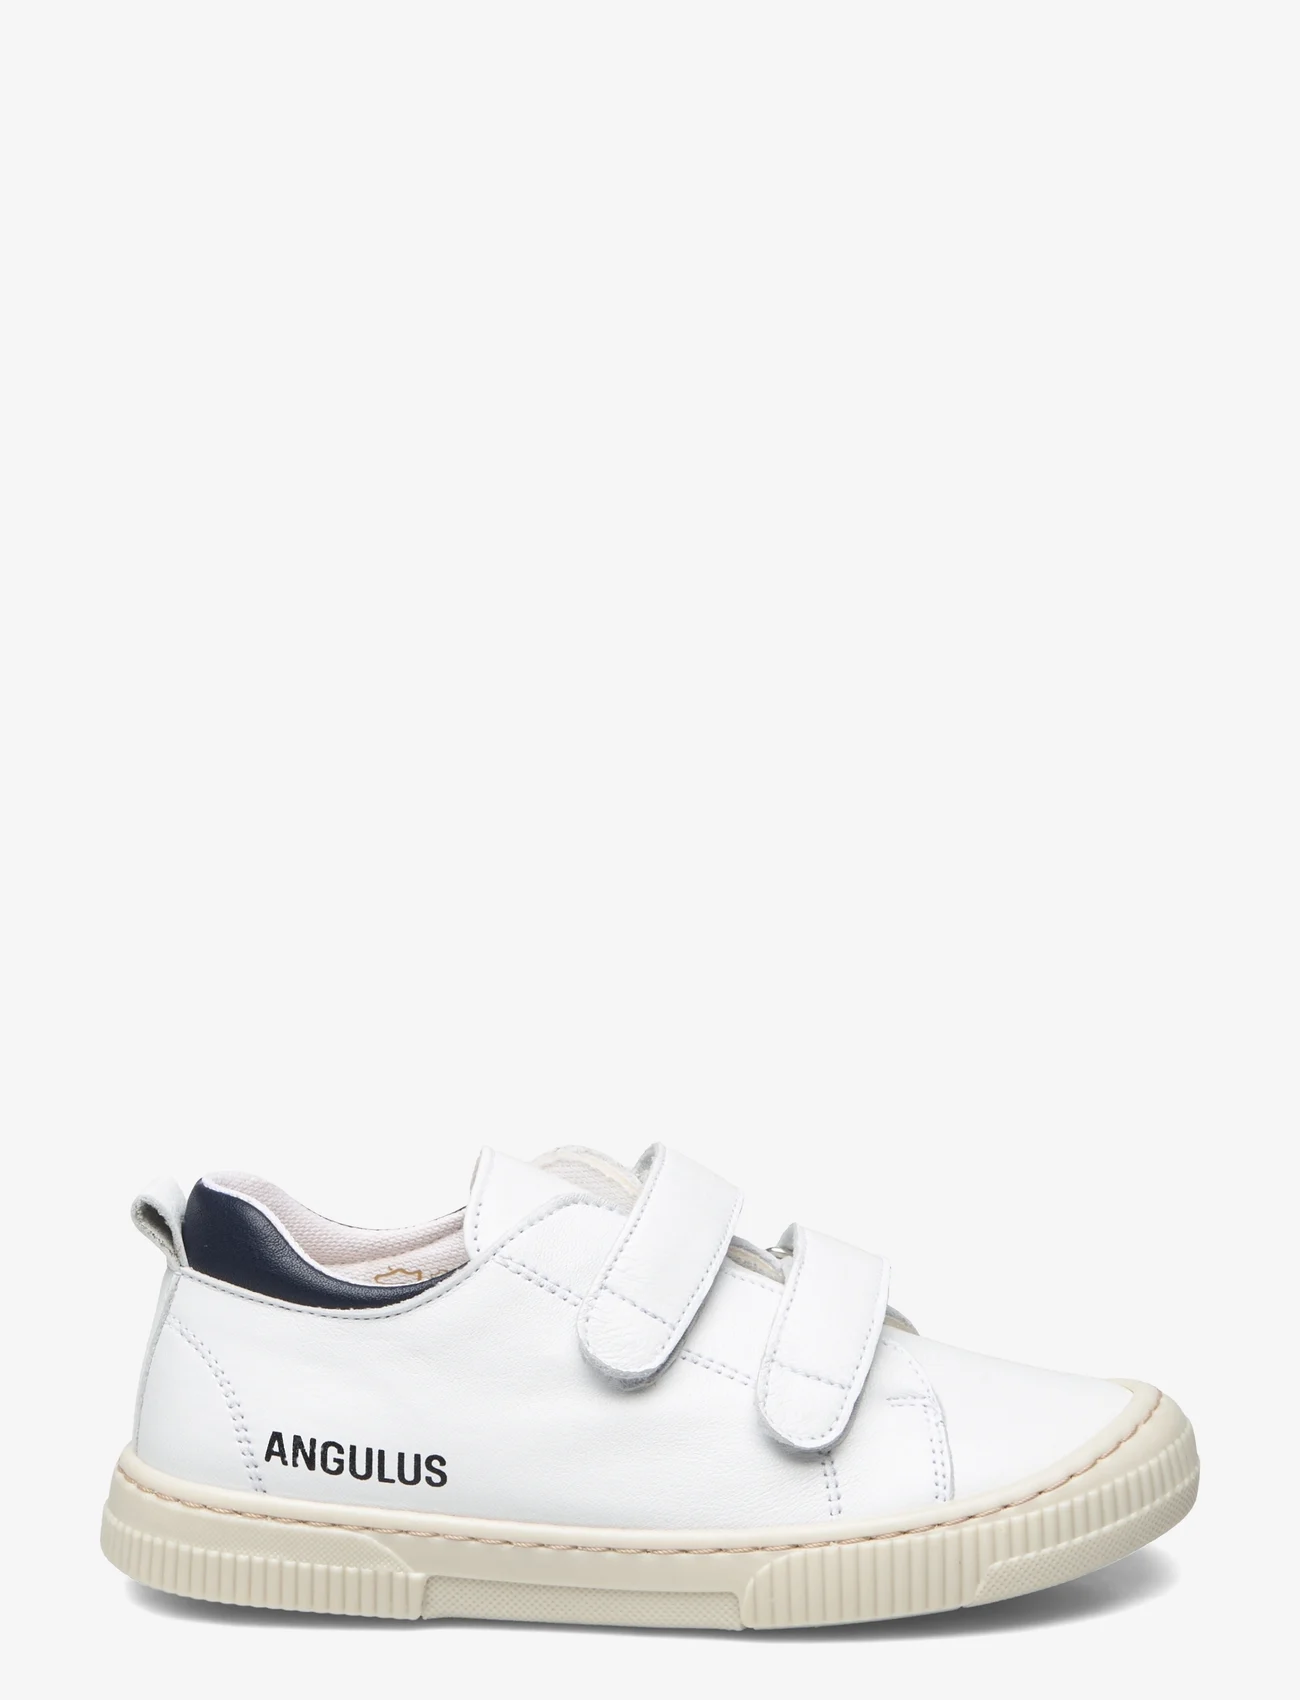 ANGULUS - Shoes - flat - with velcro - gode sommertilbud - 1521/2585 hvid/navy - 1